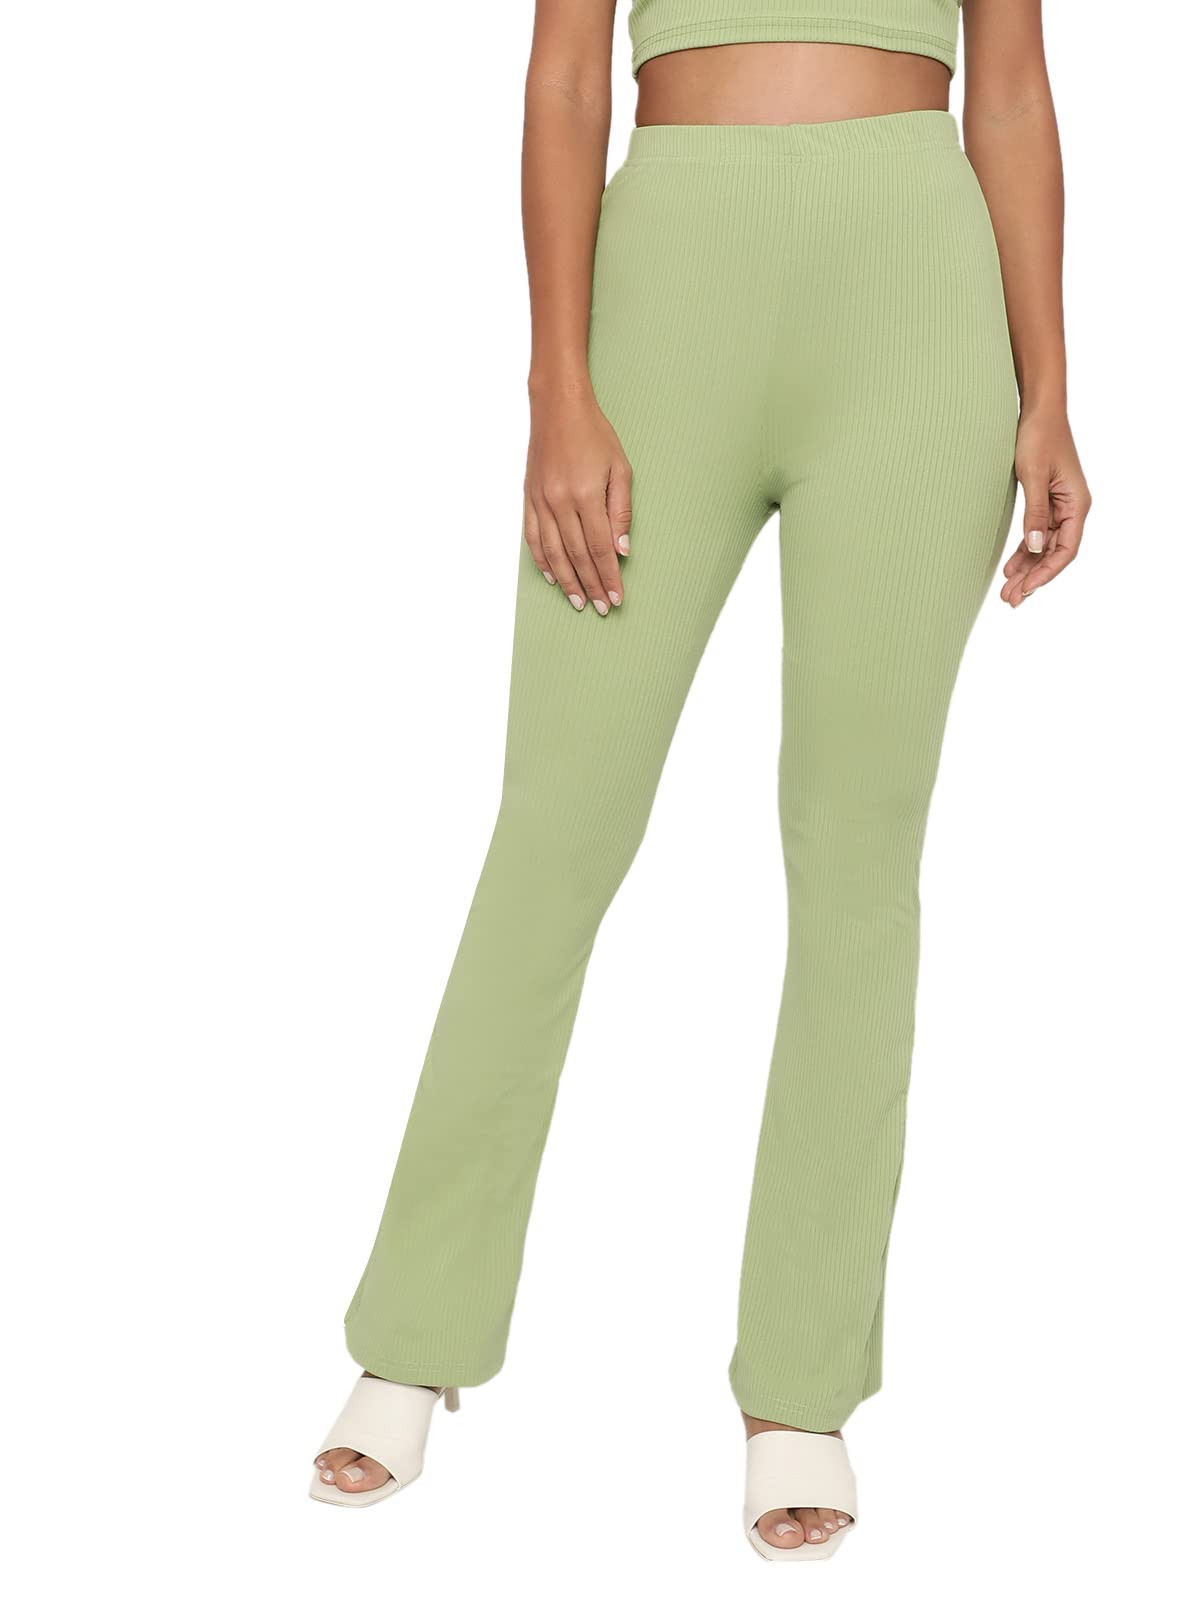 Shasmi Pista Green Lightweight Stretchable Yoga Pants Boot-Cut